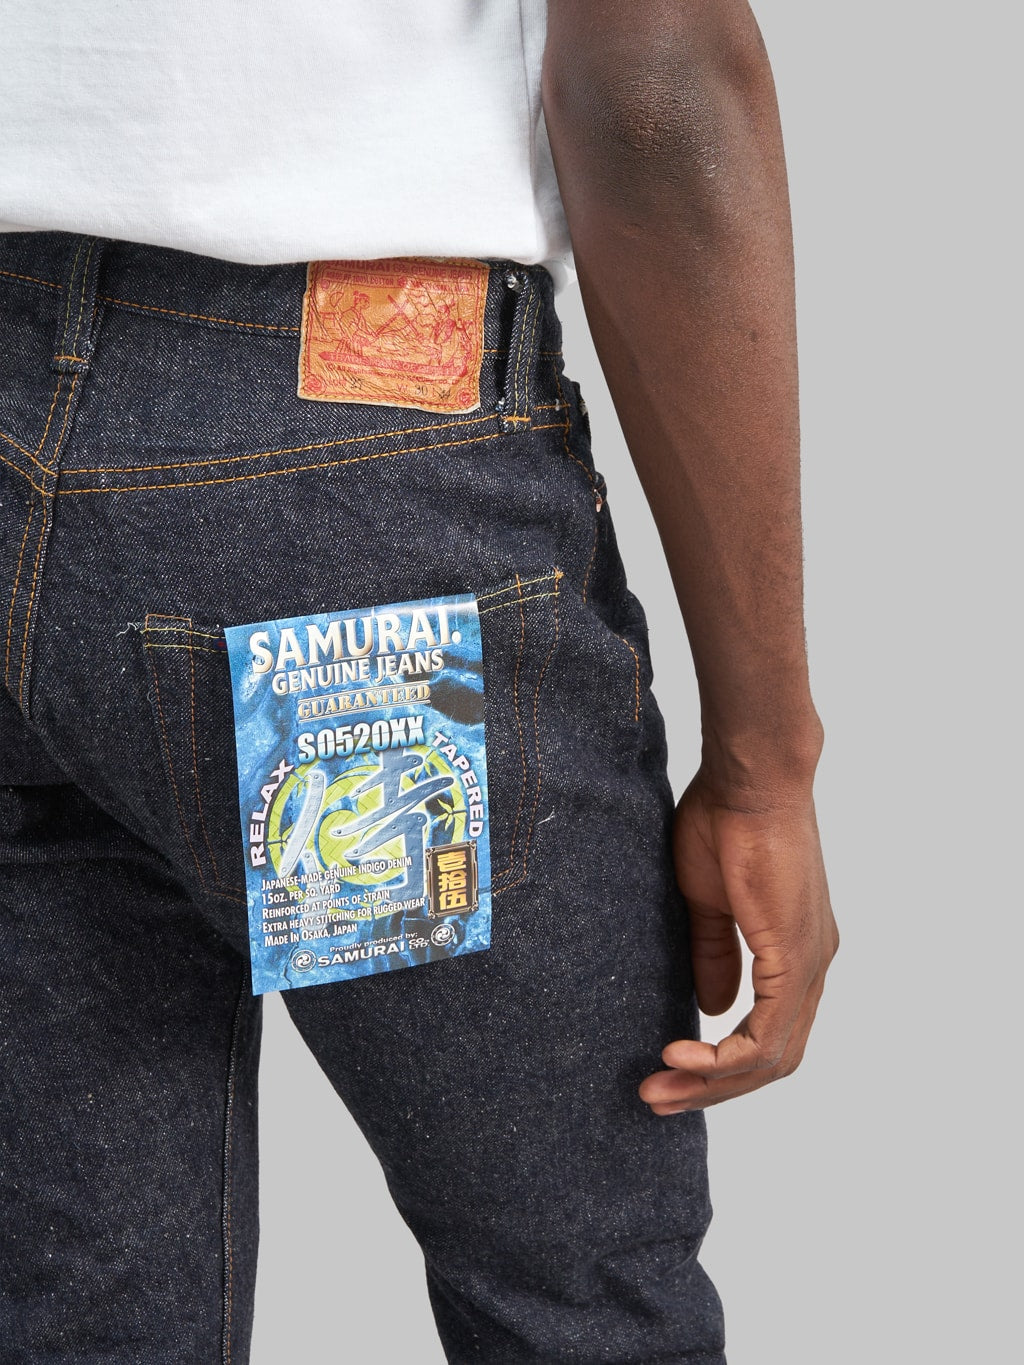 samurai jeans s0520xx otokogi 15oz relaxed tapered jeans pocket flasher